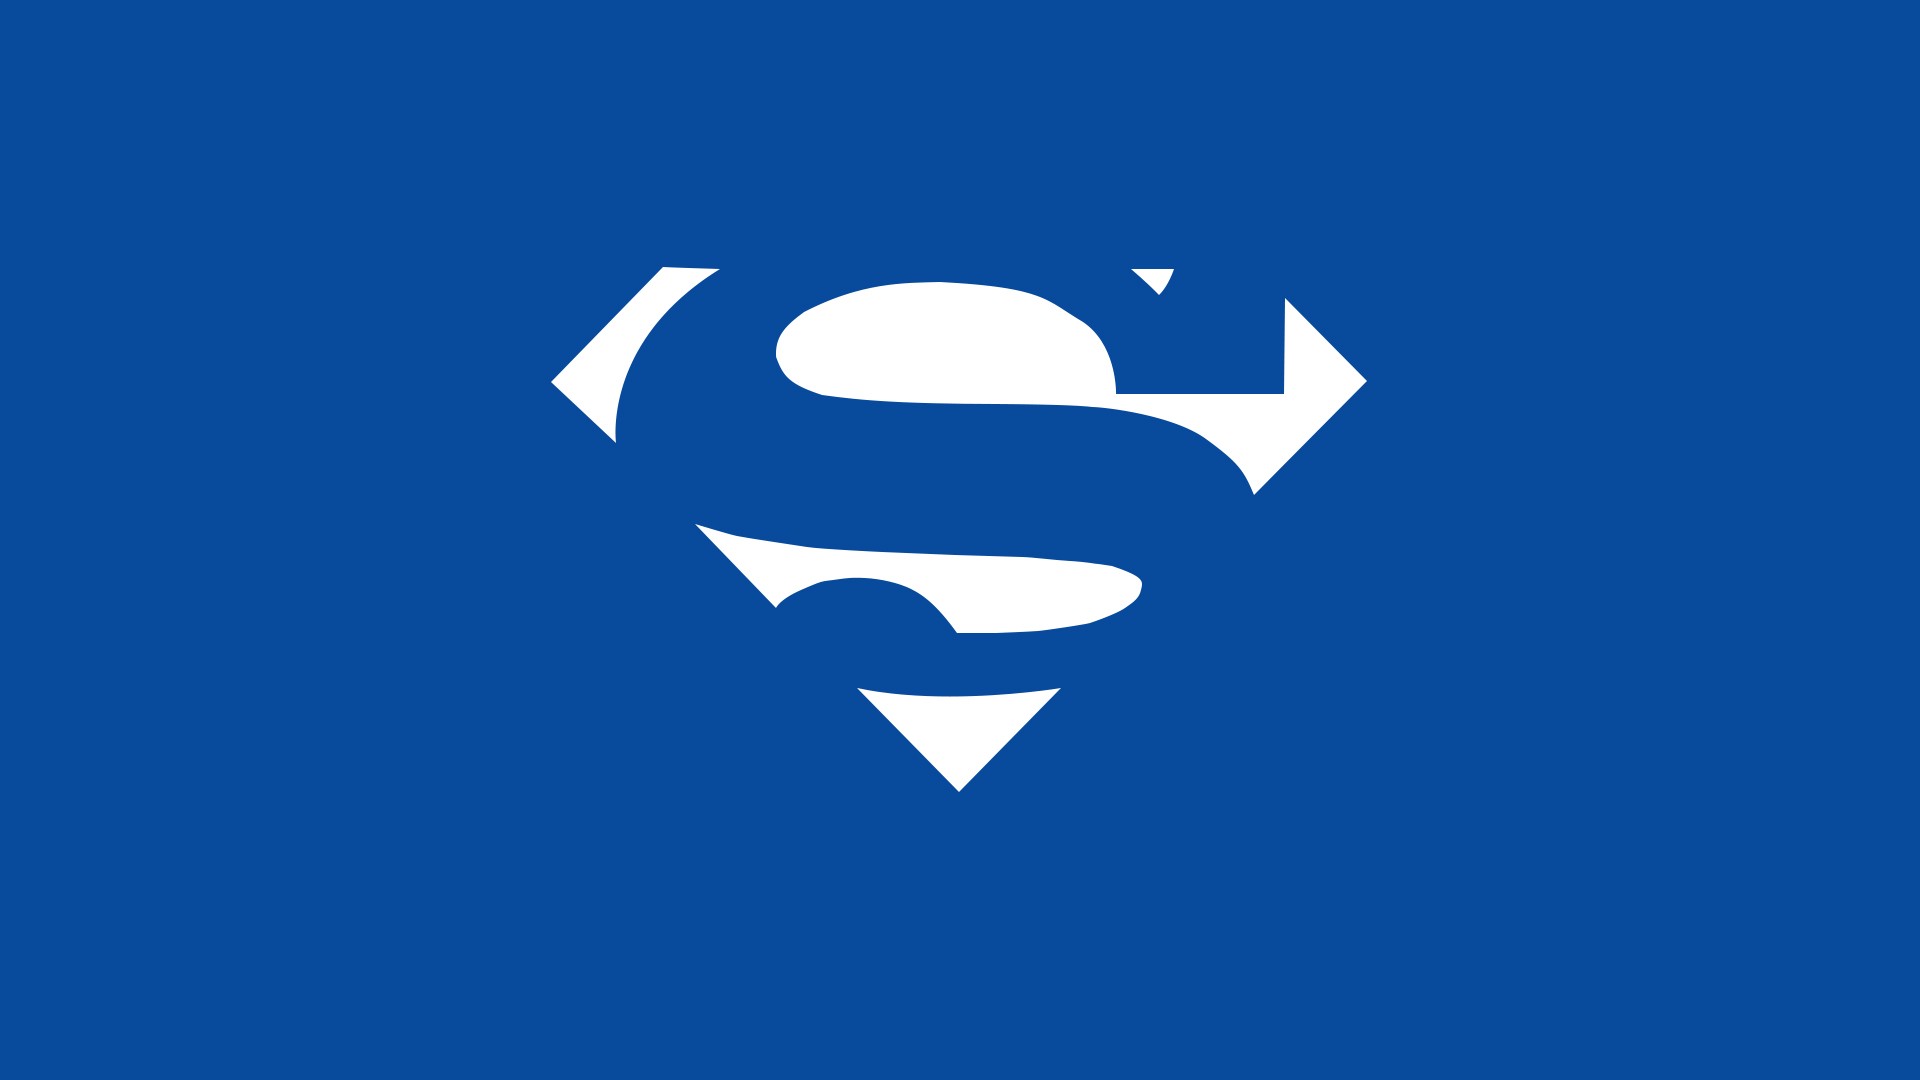 General 1920x1080 Superman minimalism logo blue background simple background superman logo superhero